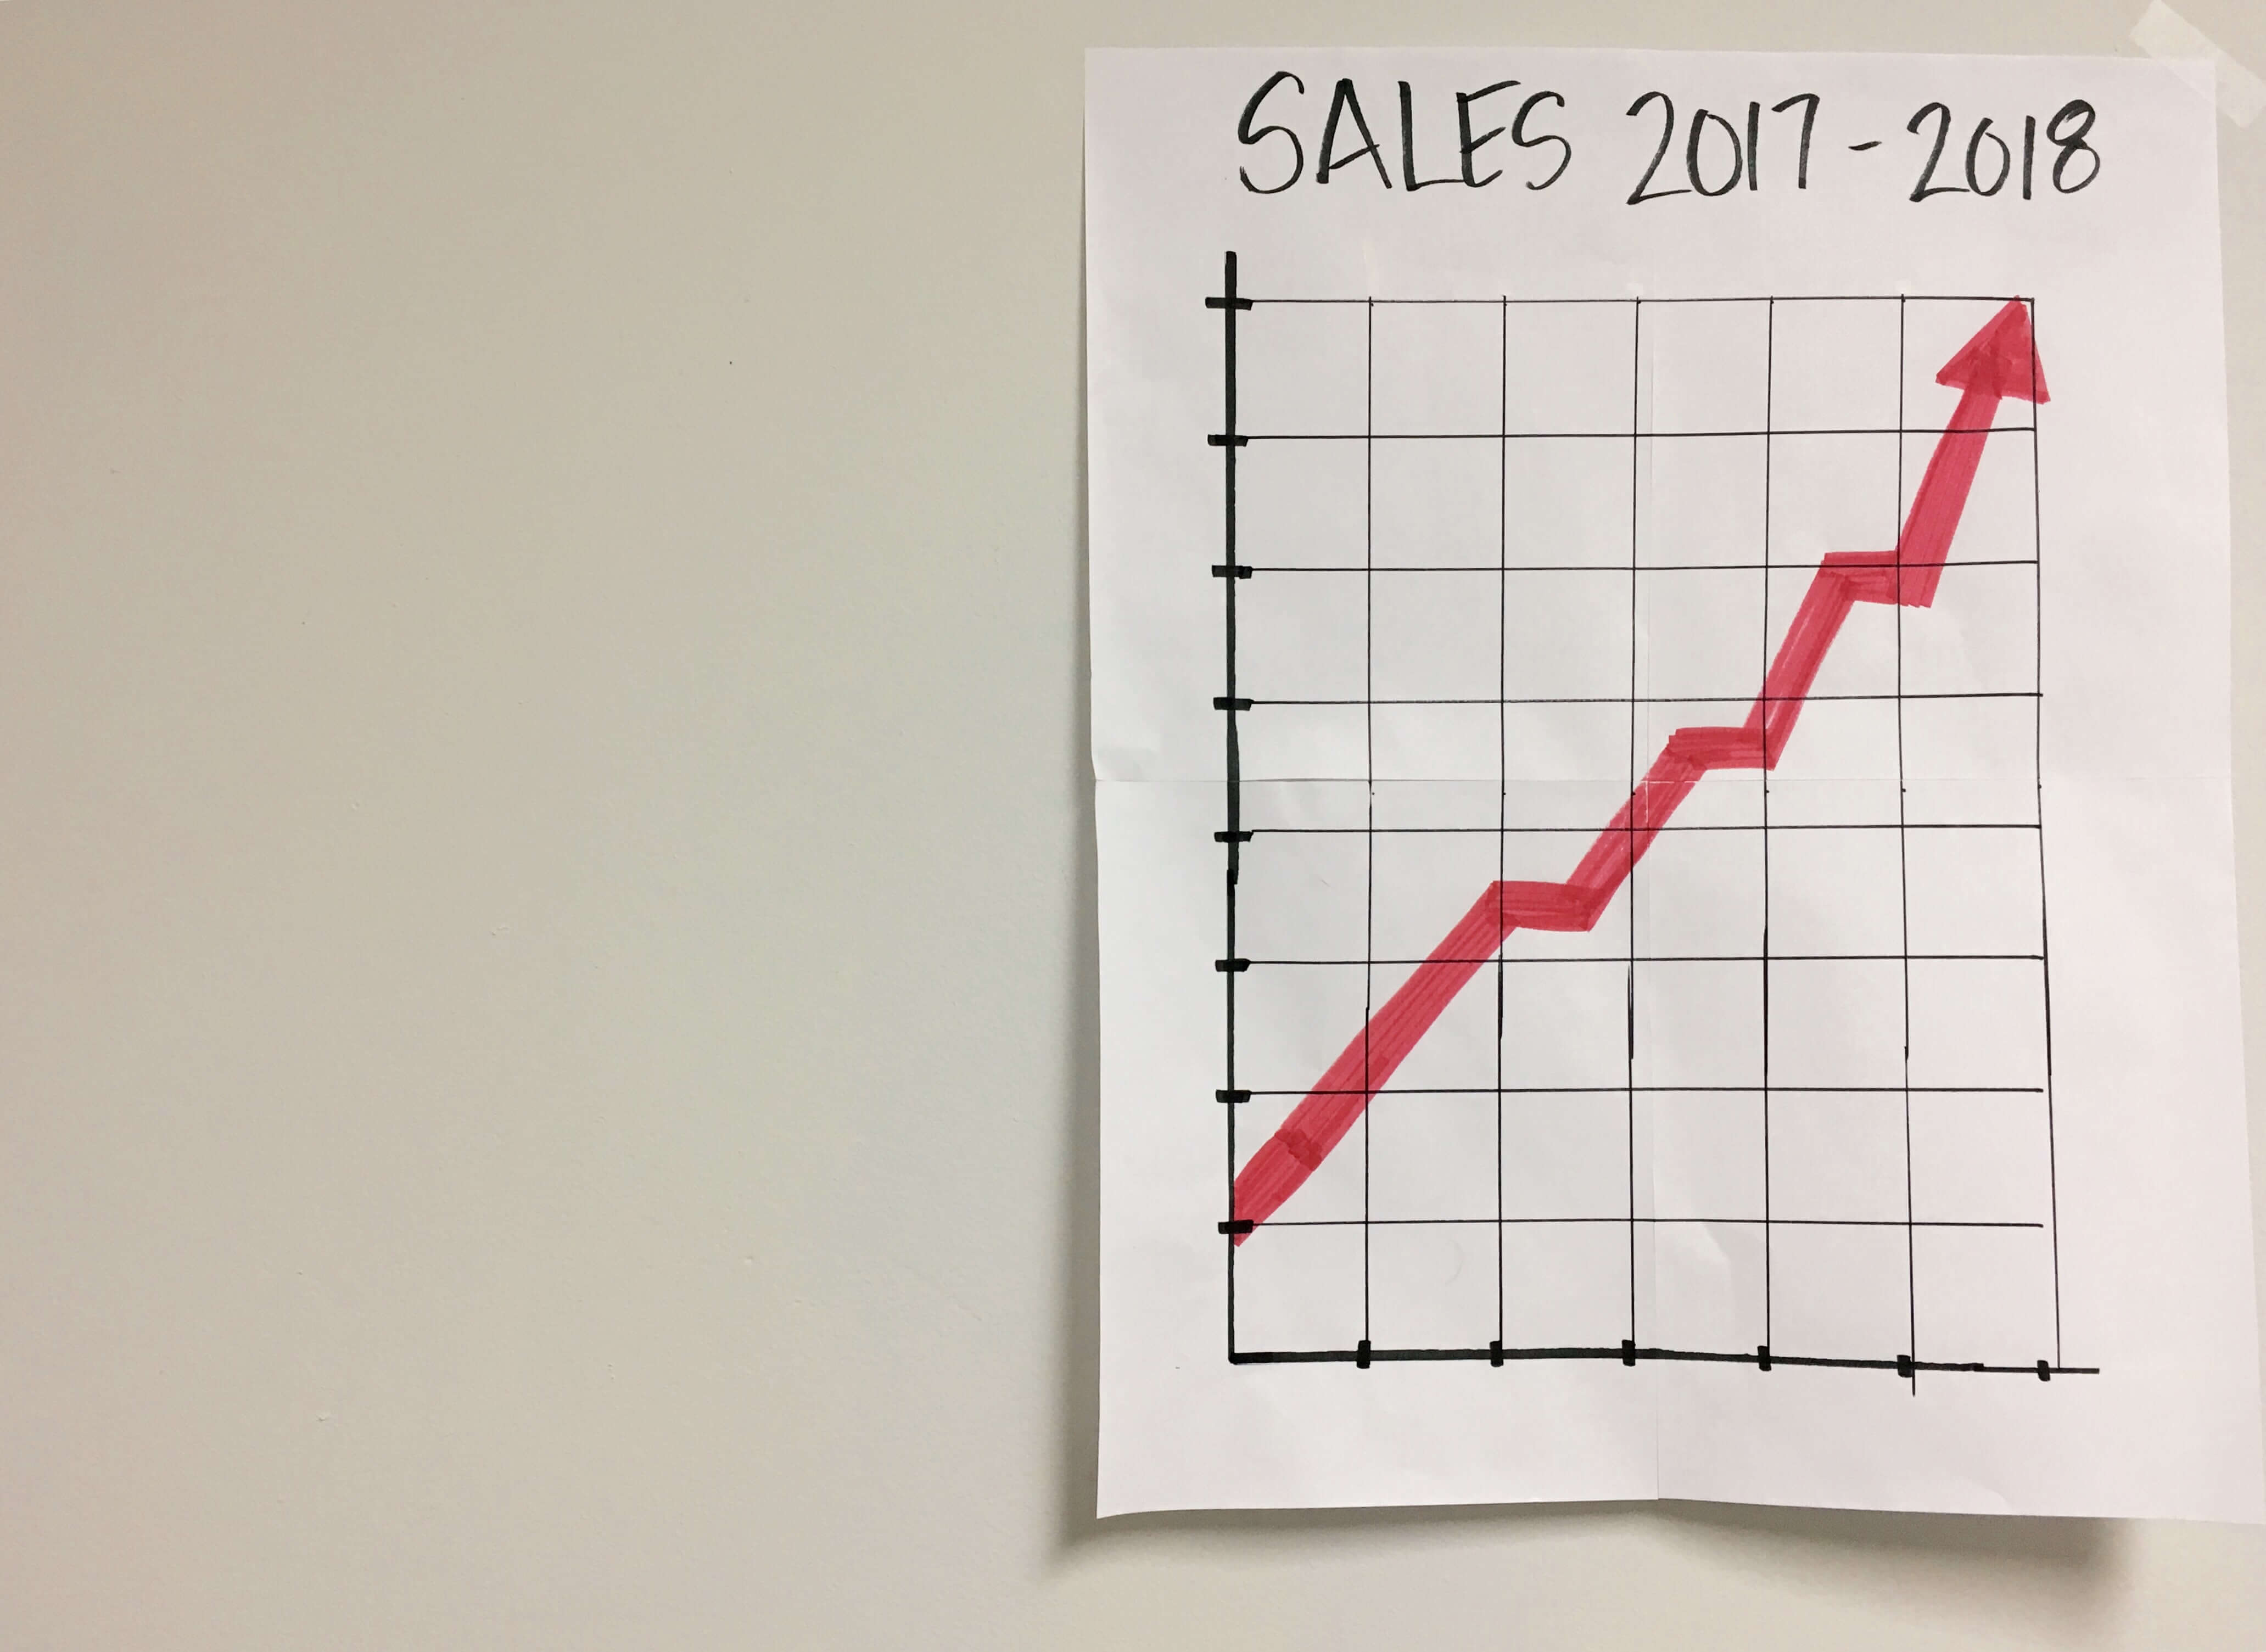 sales chart showing increasing revenue